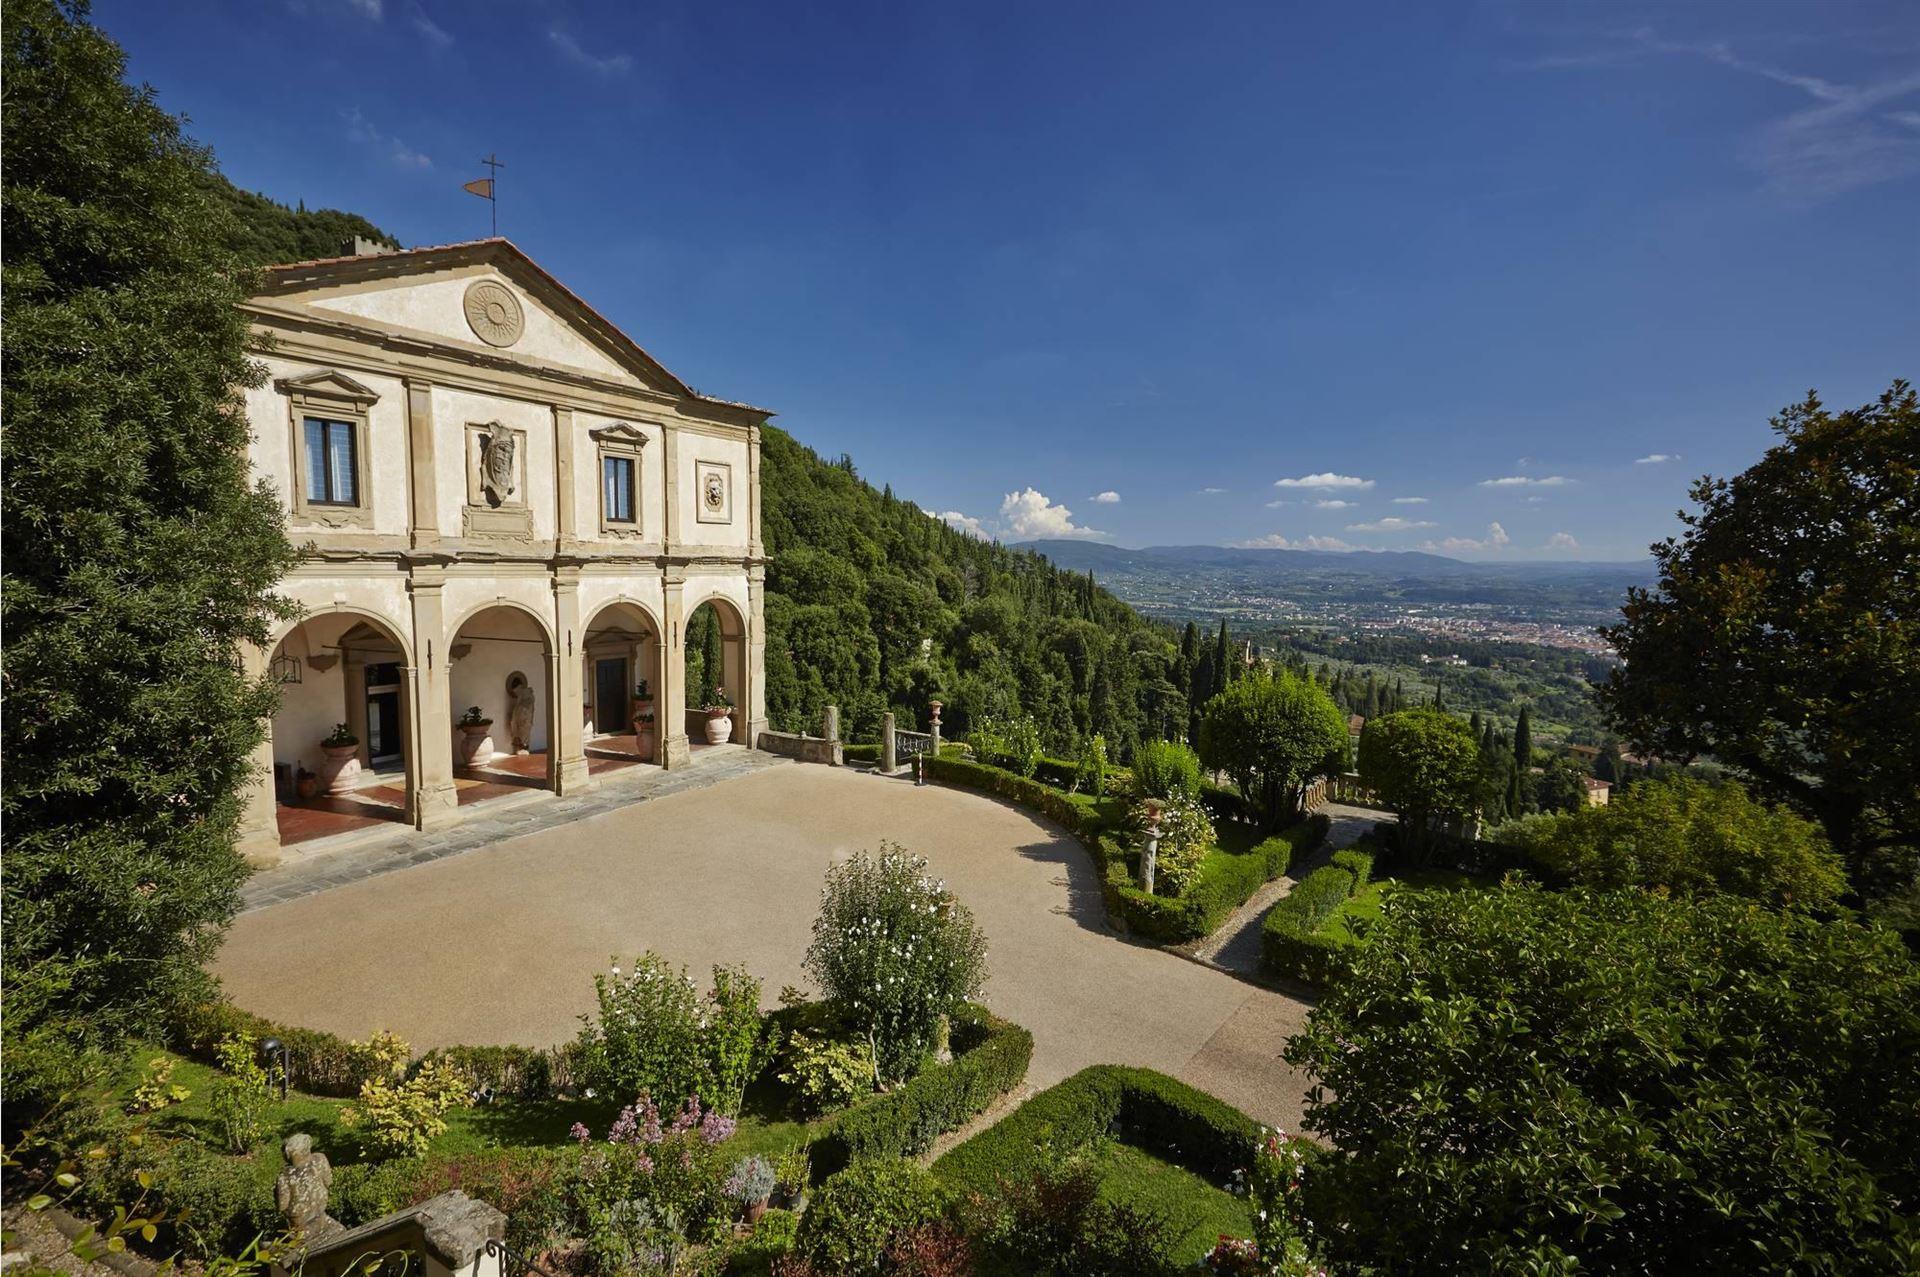 Belmond Villa San Michele luxe hotel deals